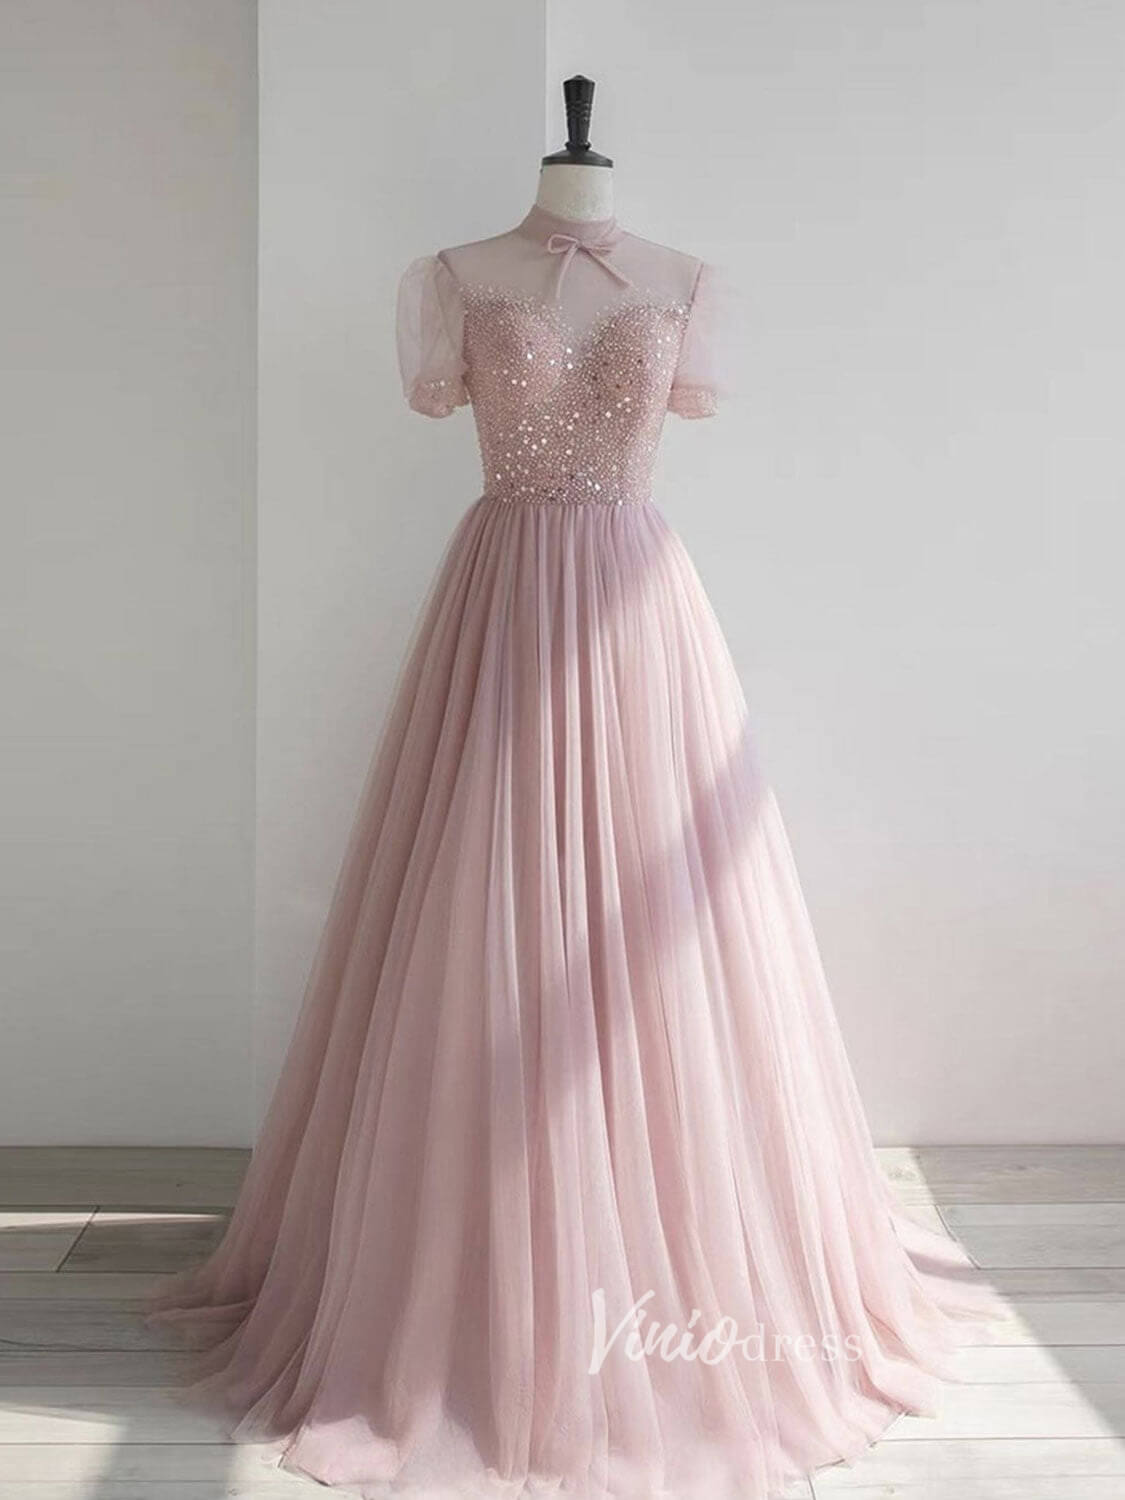 Blush Pink Puffed Prom Dresses High Neck Sequin Evening Dress FD3087-prom dresses-Viniodress-Blush Pink-Custom Size-Viniodress